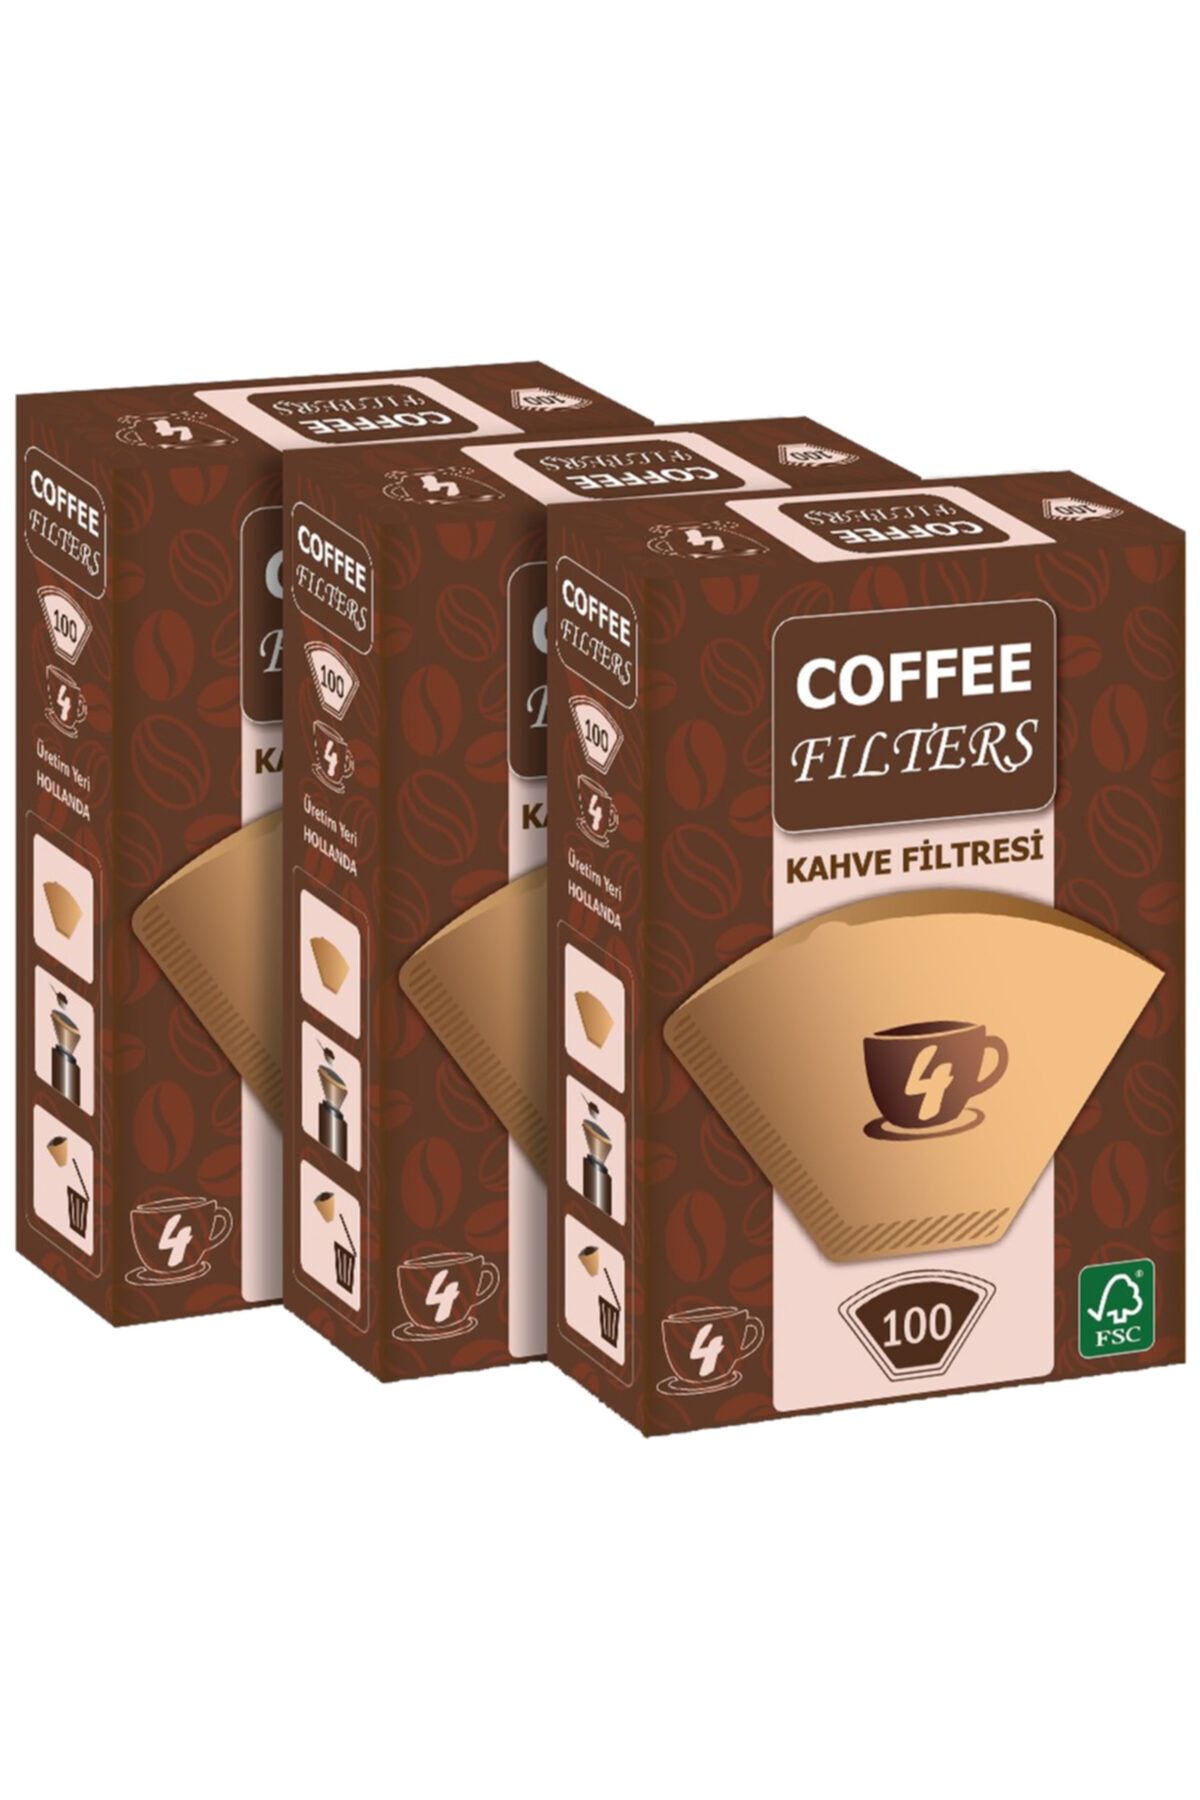 Coffee Filters Filtre Kahve Kağıdı No:4 100'lü @ 3 Paket